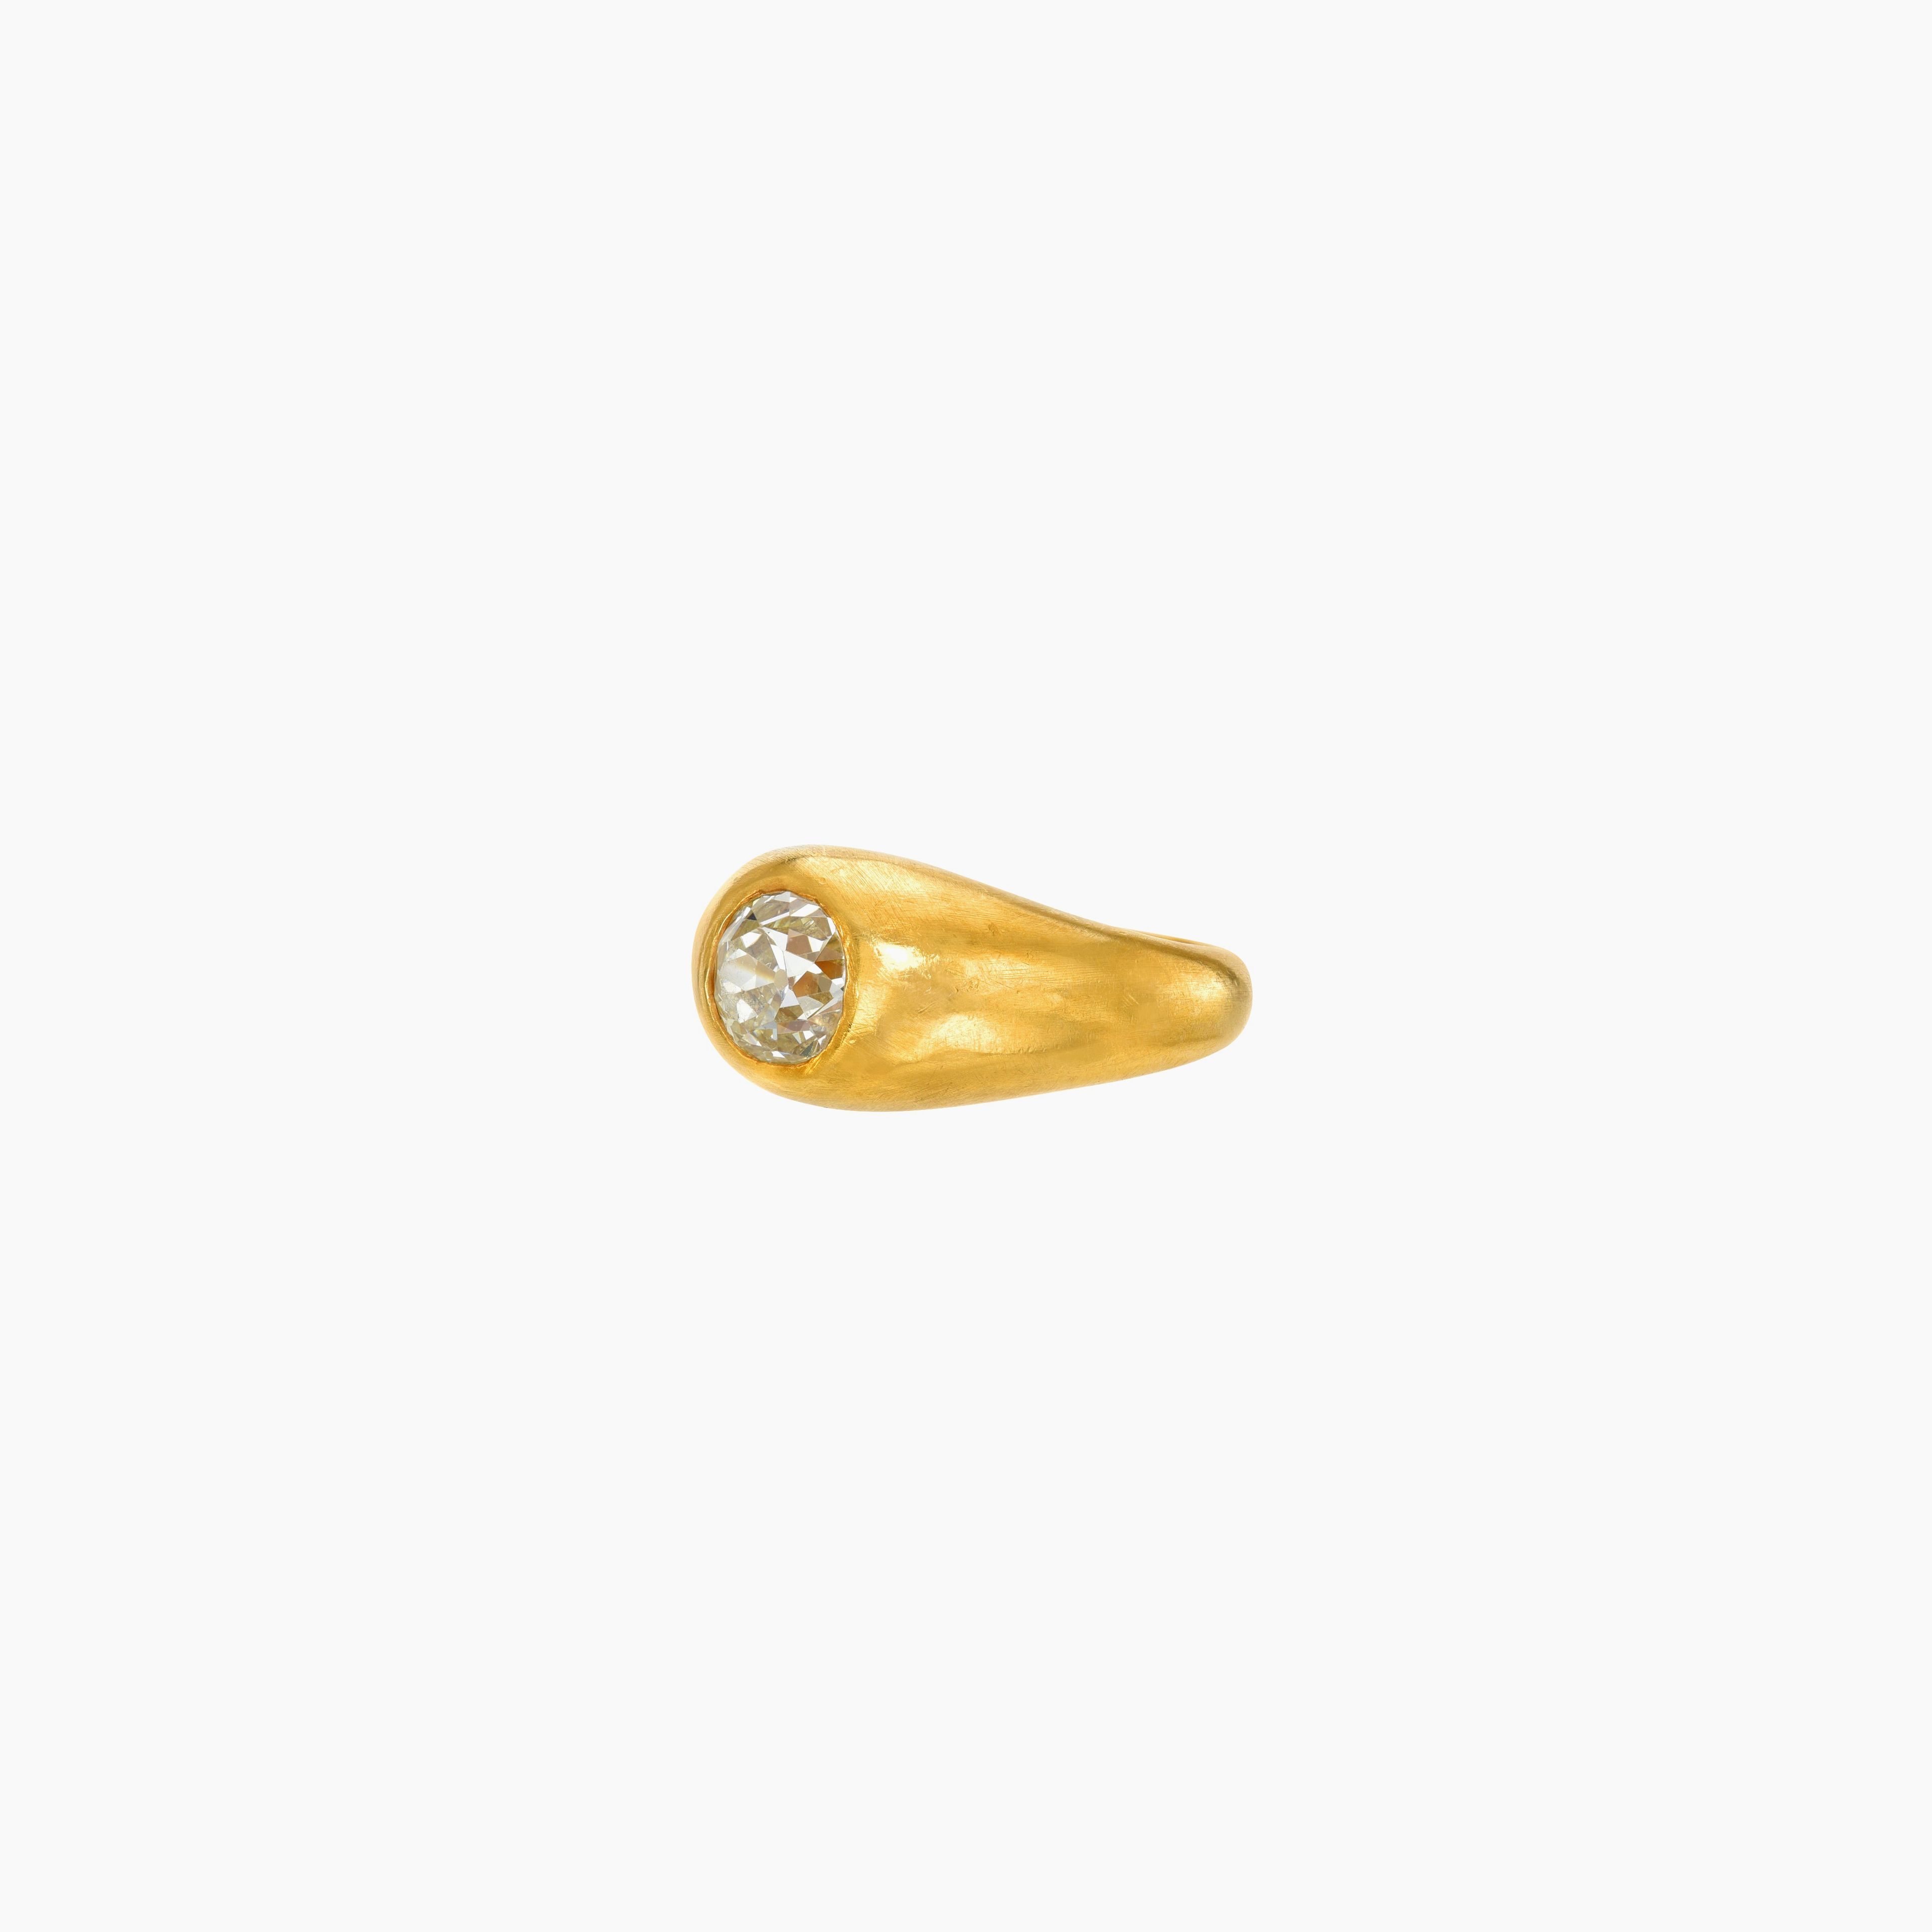 One Of A Kind Old Mine Cut Diamond Gem Signet Ring